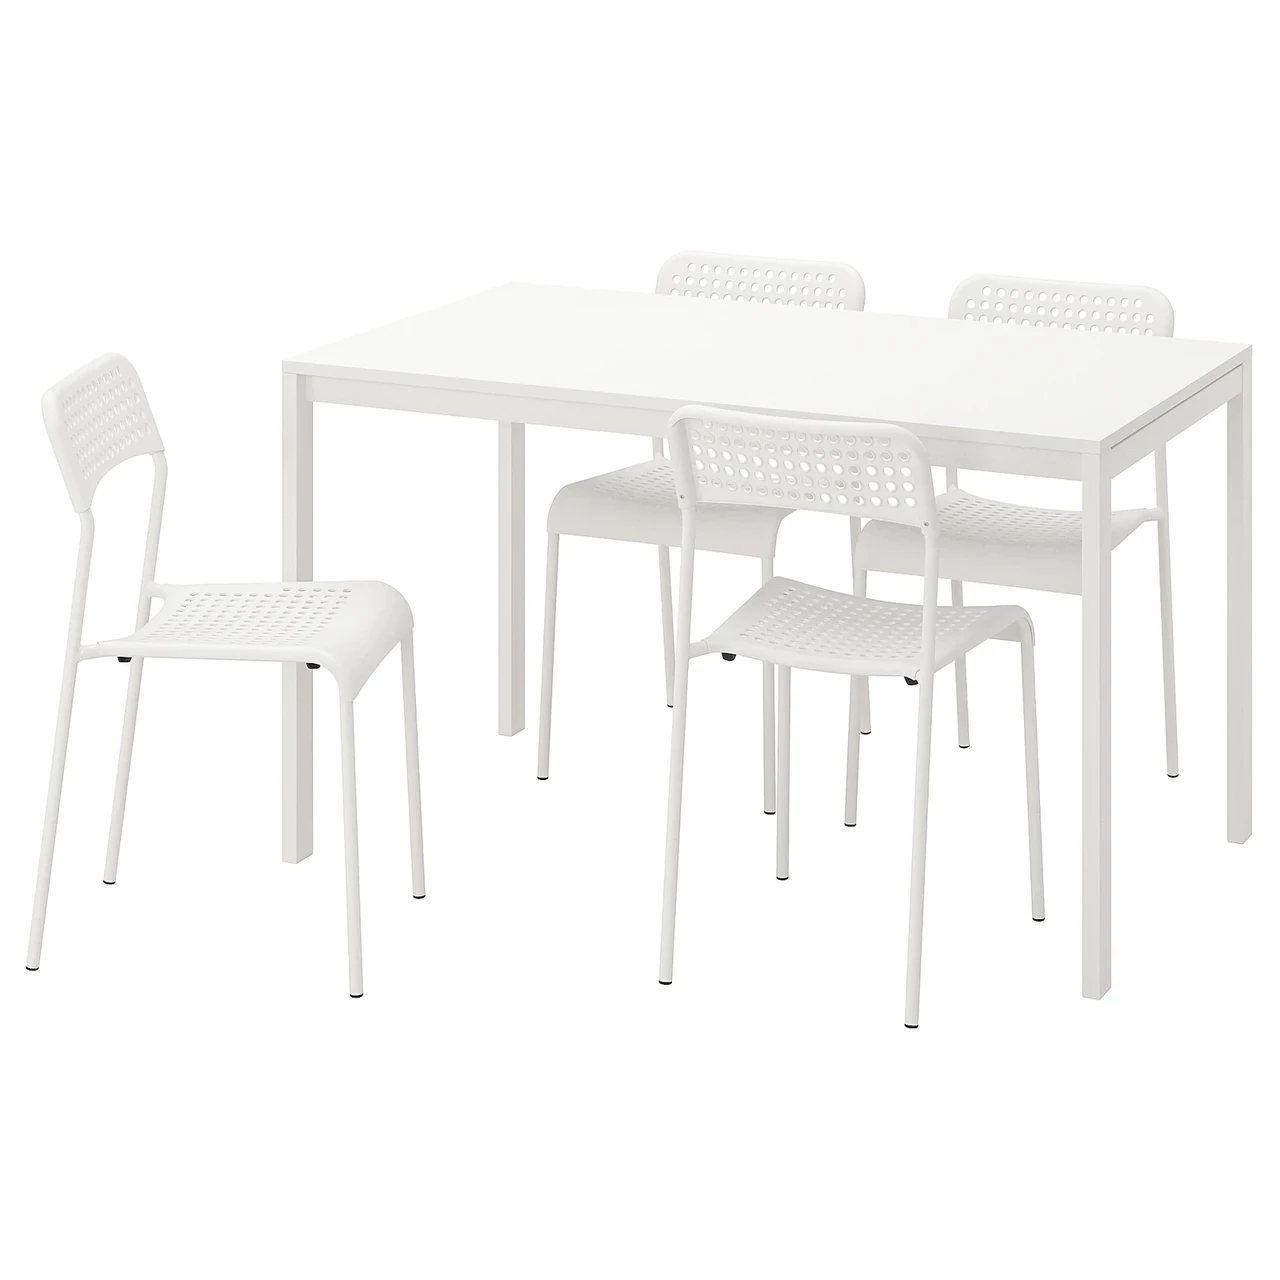 Кухонный стол со стульями MELLTORP Мельторп / ADDE Адде